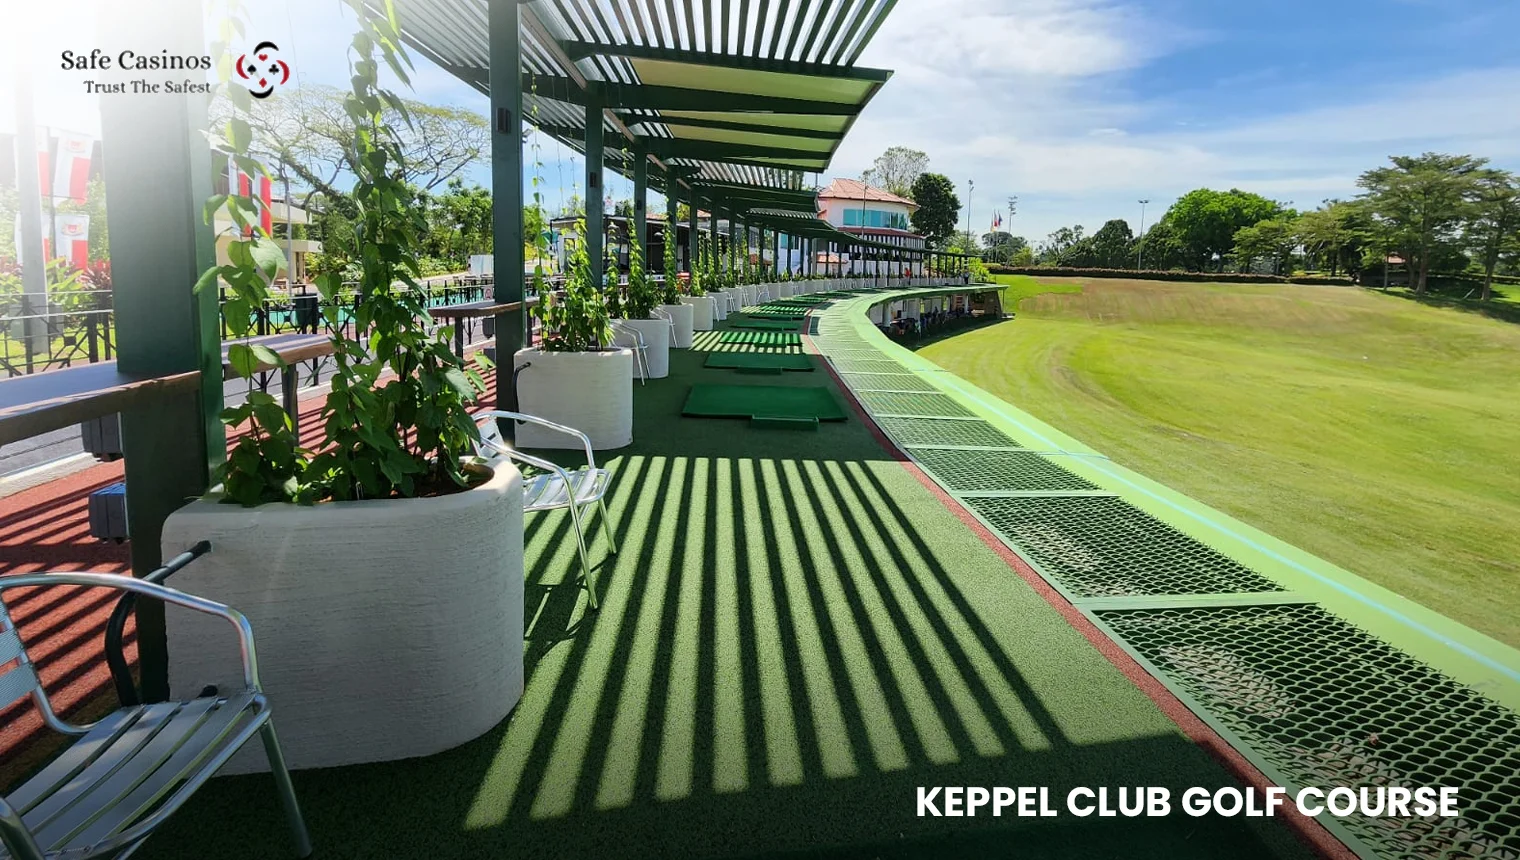 Keppel Club Golf Course